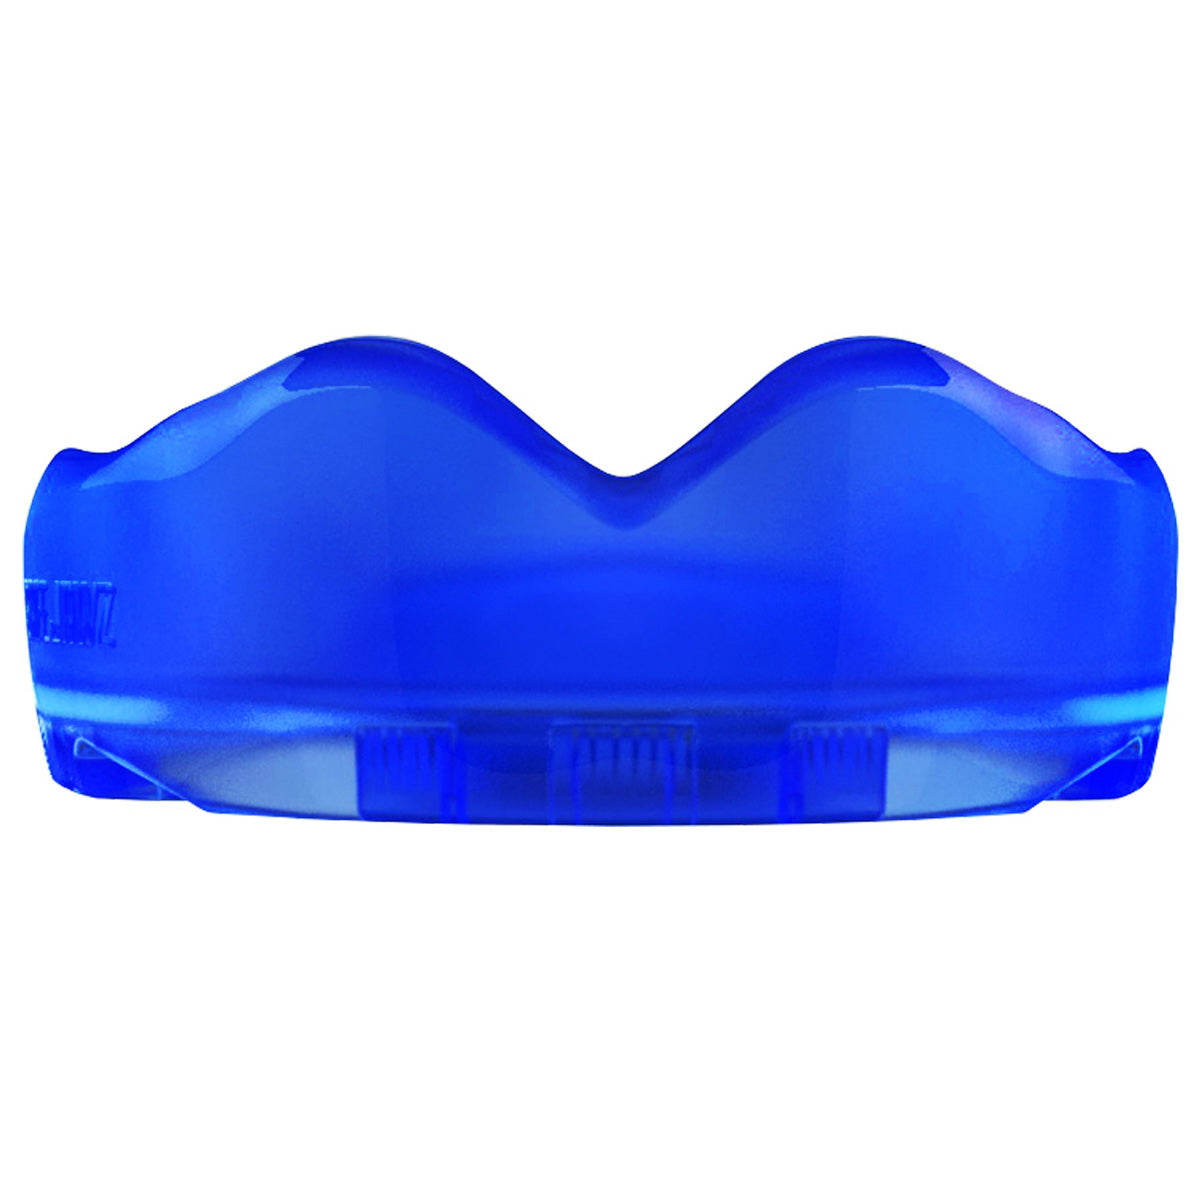 Protège-dents SafeJawz Extro Blue Ice